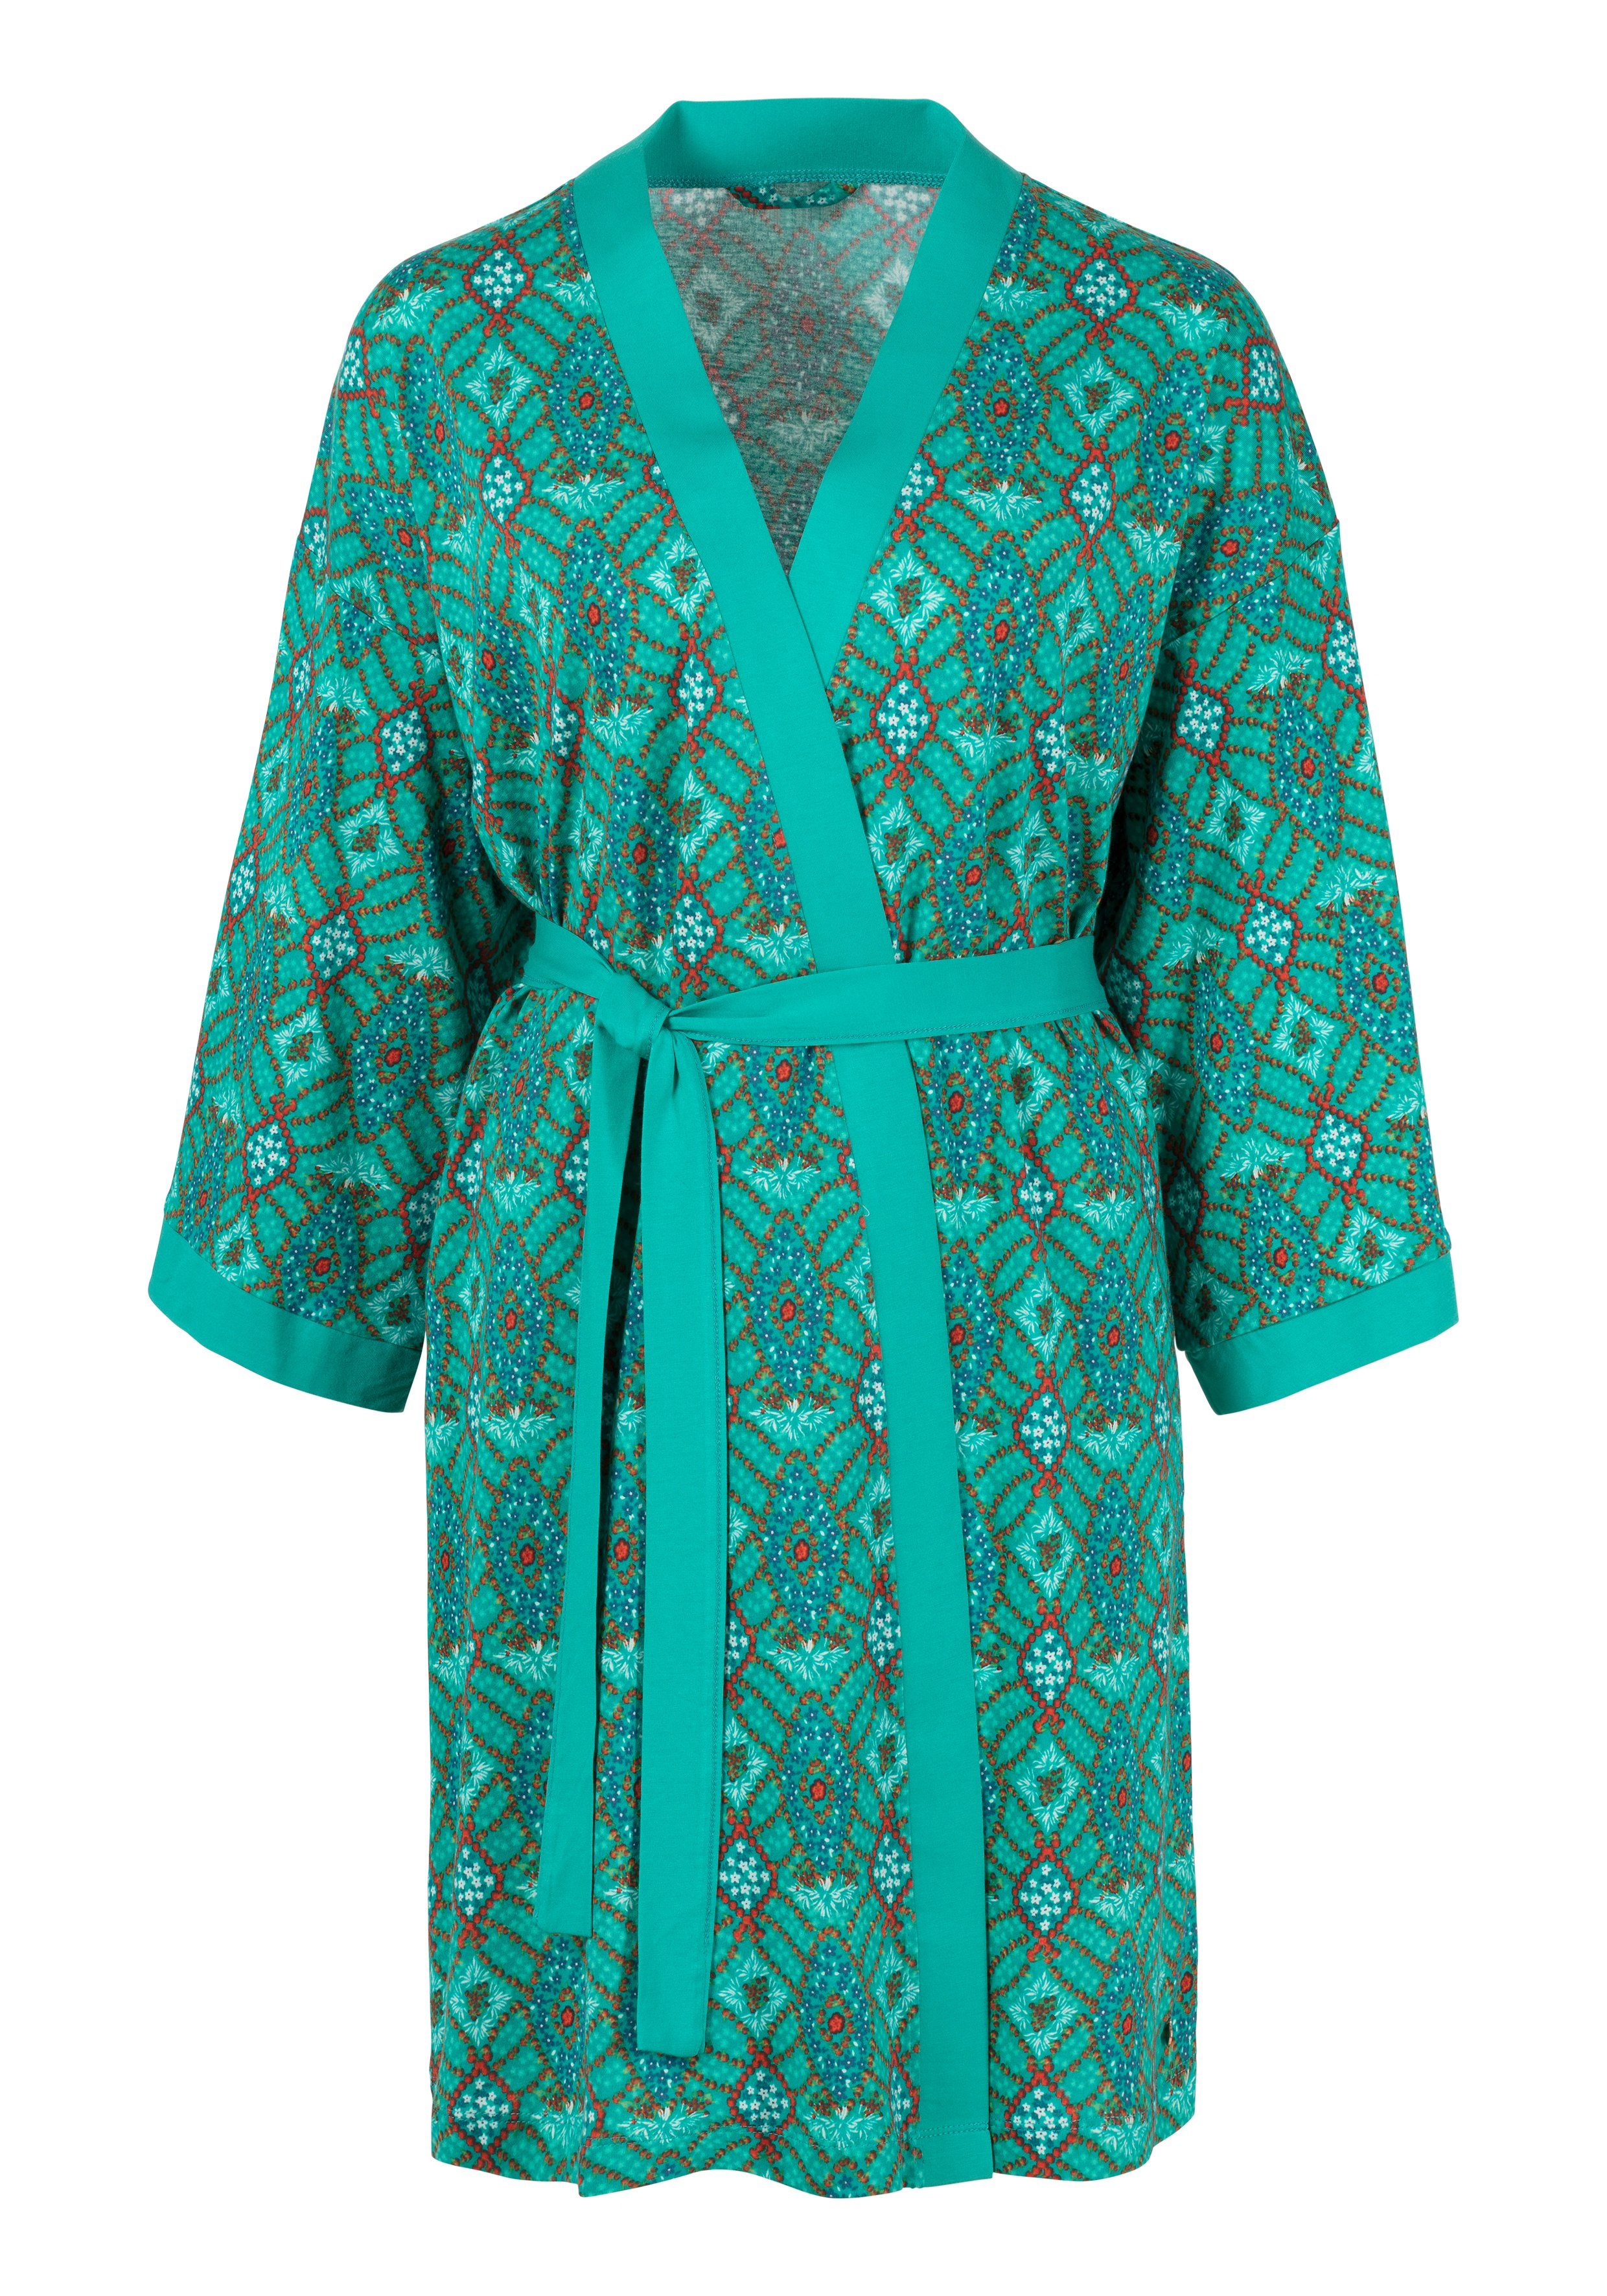 s.Oliver Kimono, Kurzform, Baumwoll-Mix, Gürtel, mit Ornamentdruck zum  Binden | Kimonos